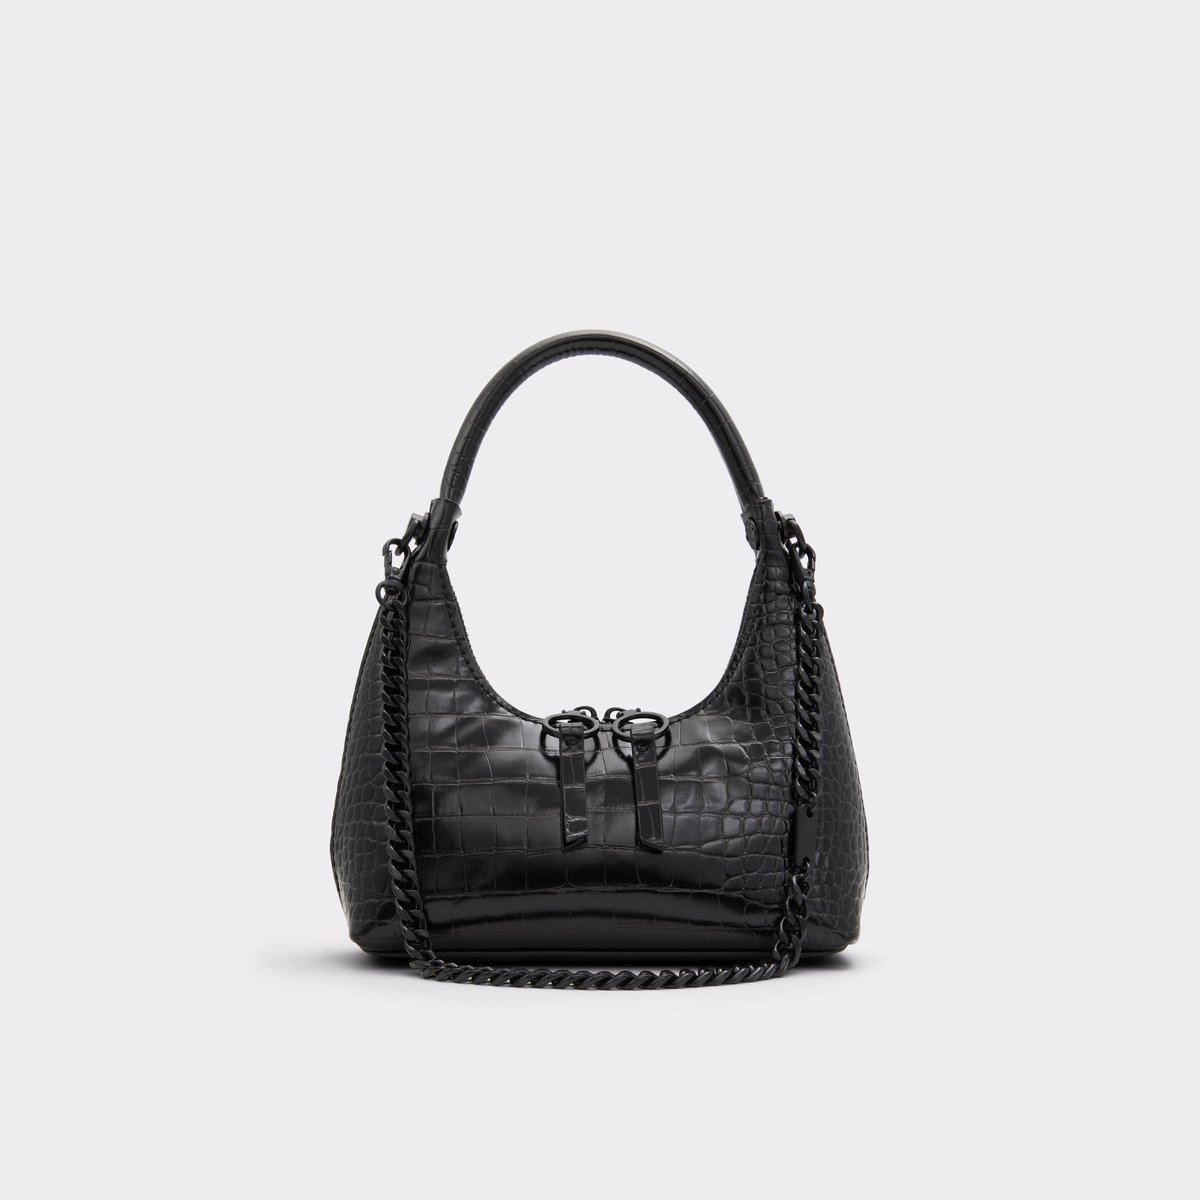 Yvanax Black Women's Top Handle Bags